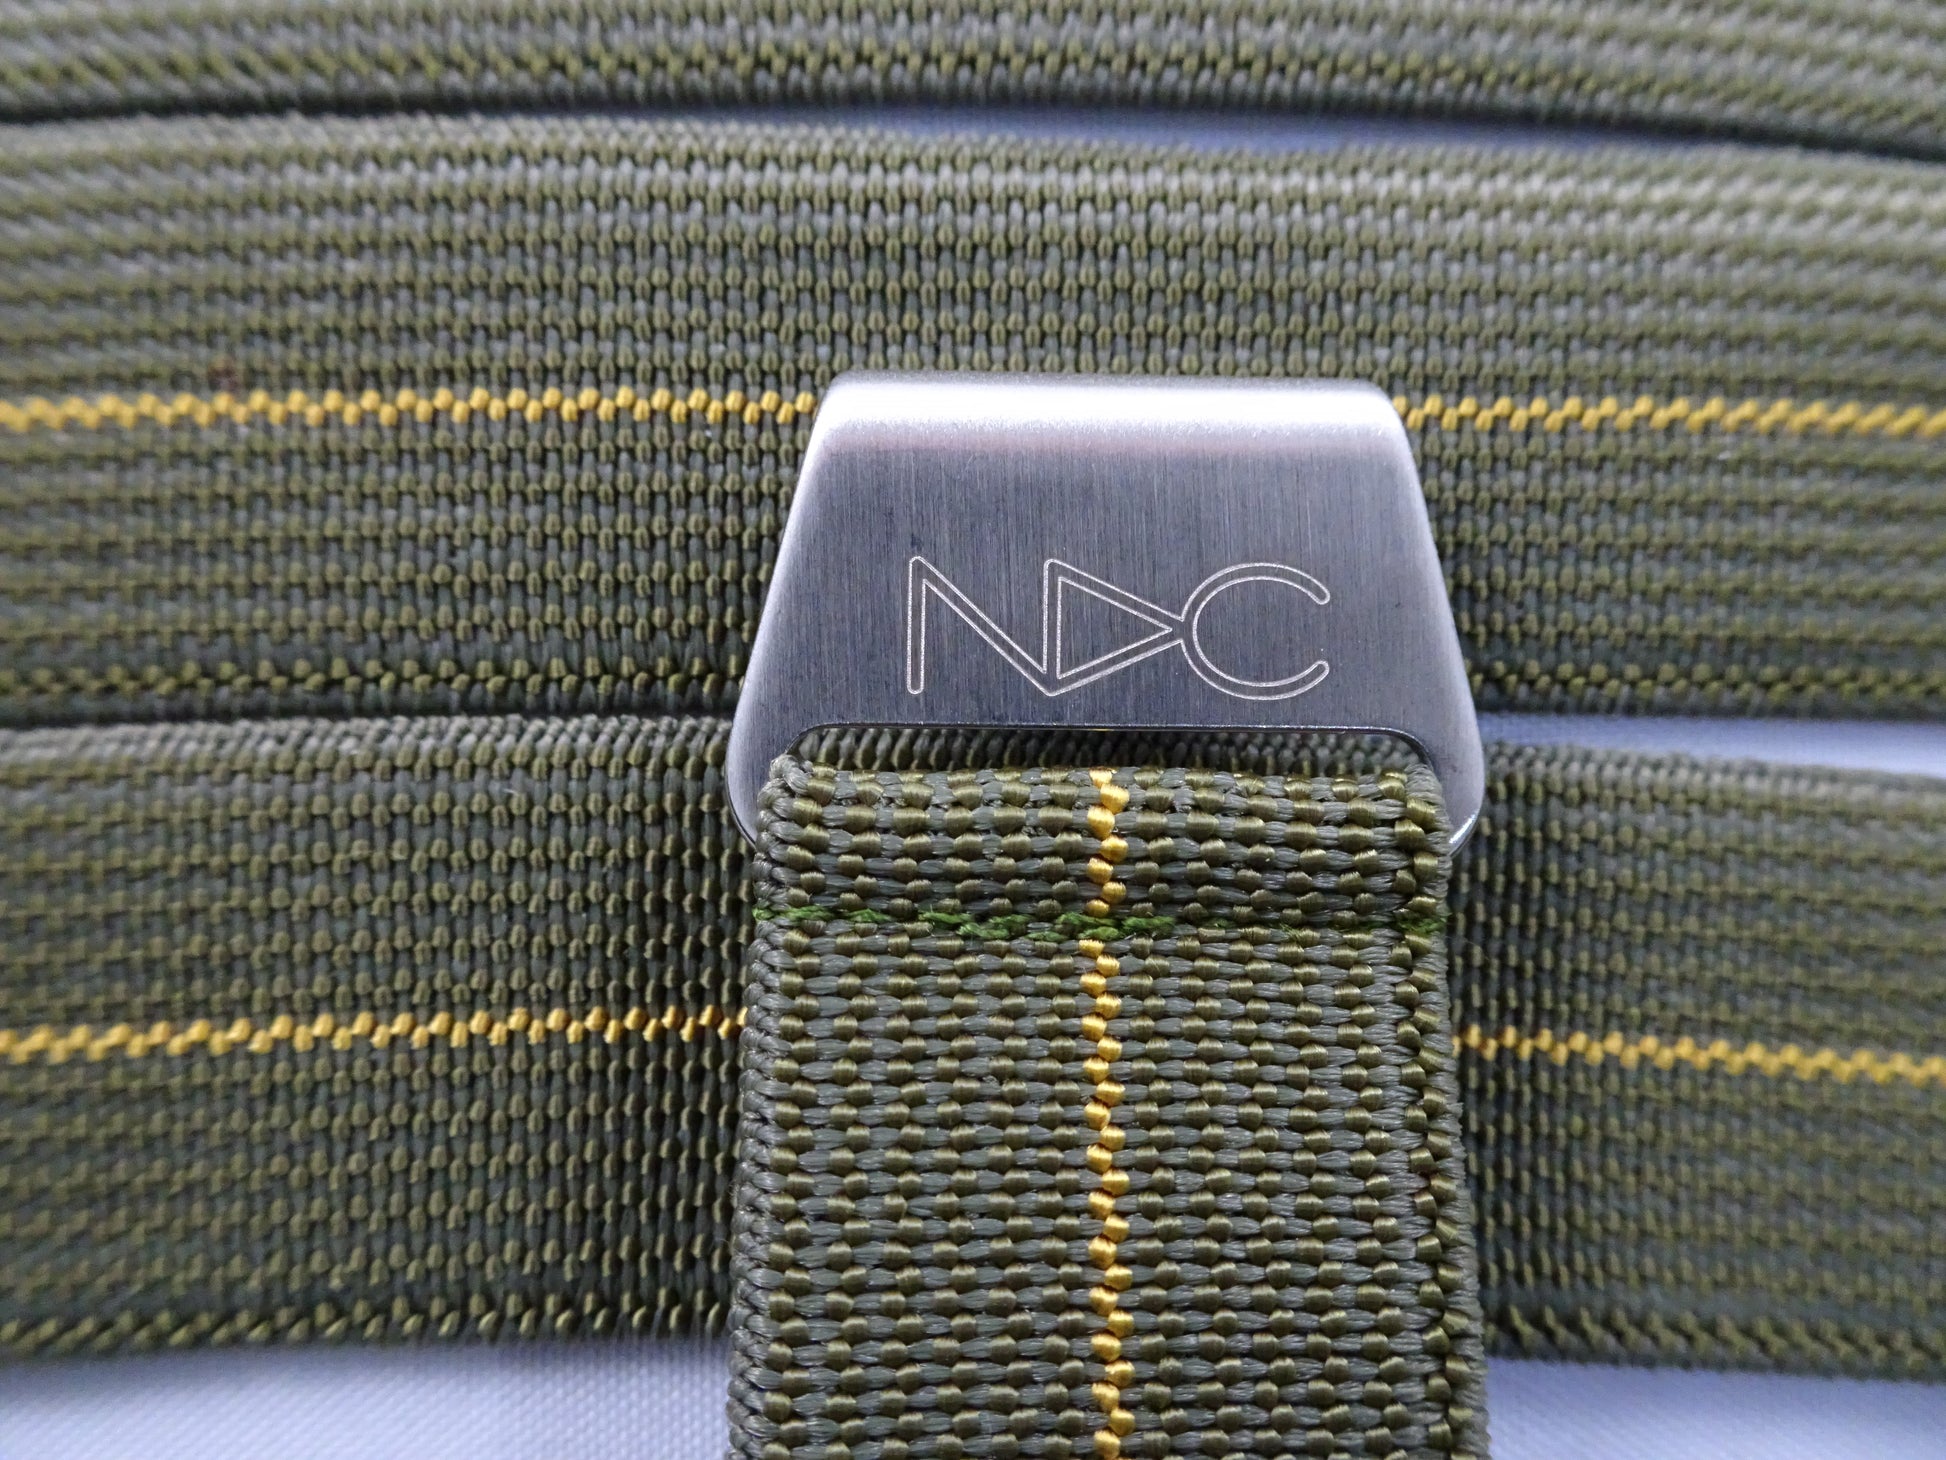 Original NDC strap - Green with Yellow Stripe - NDC Straps